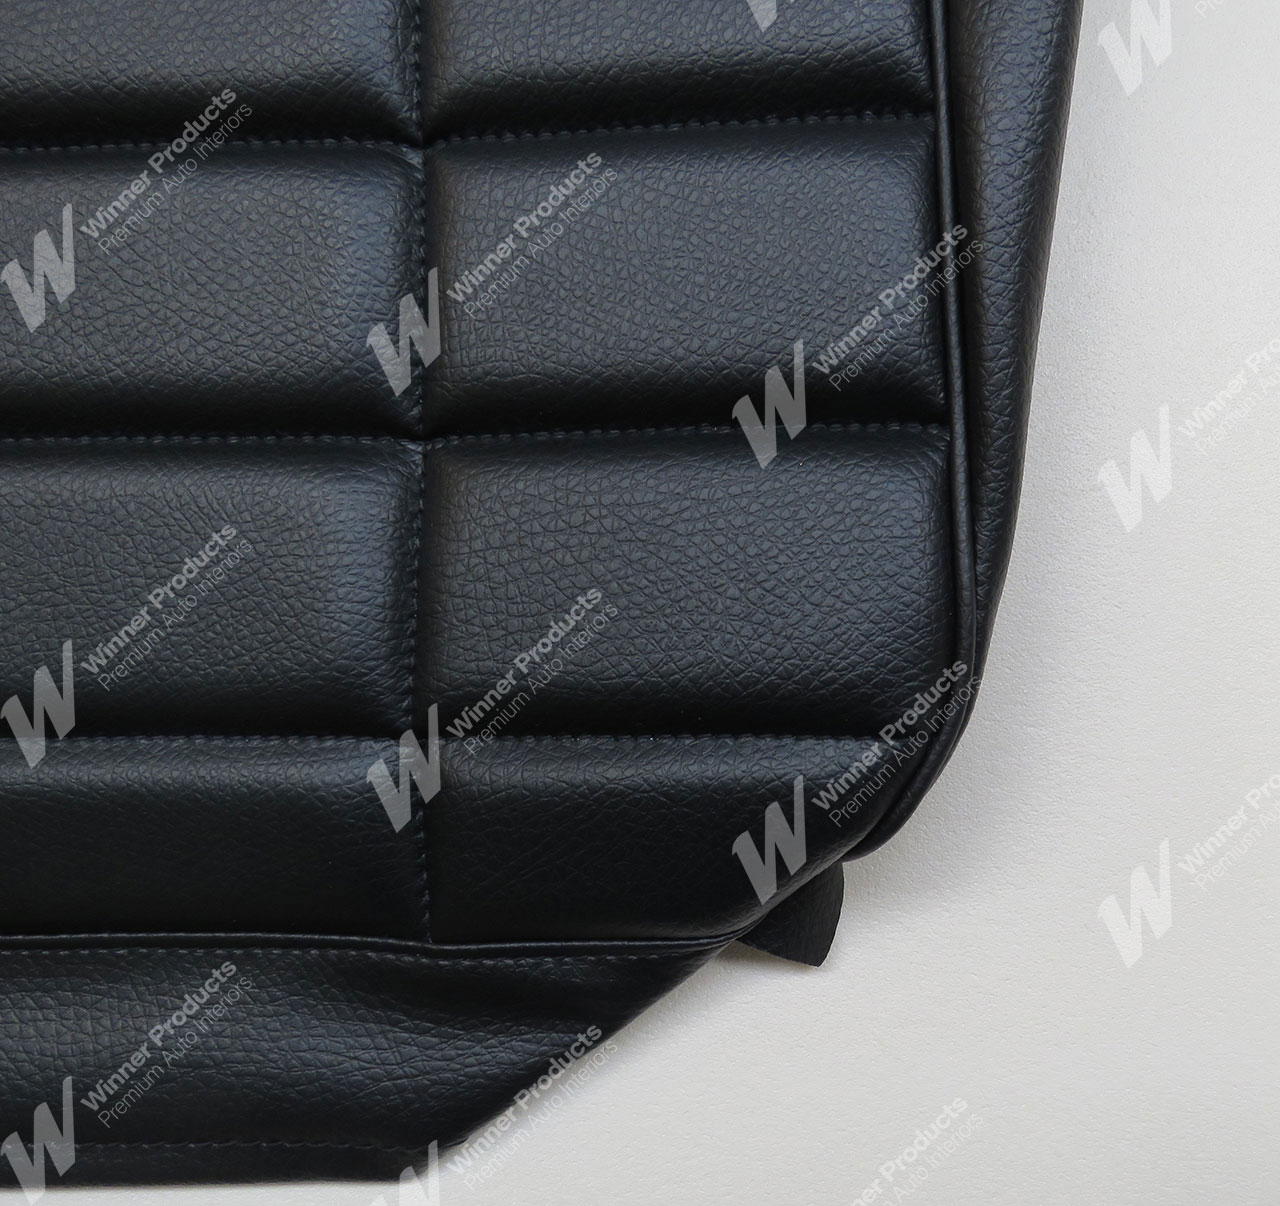 Holden Monaro HG Monaro Coupe 10X Black Seat Covers (Image 6 of 6)